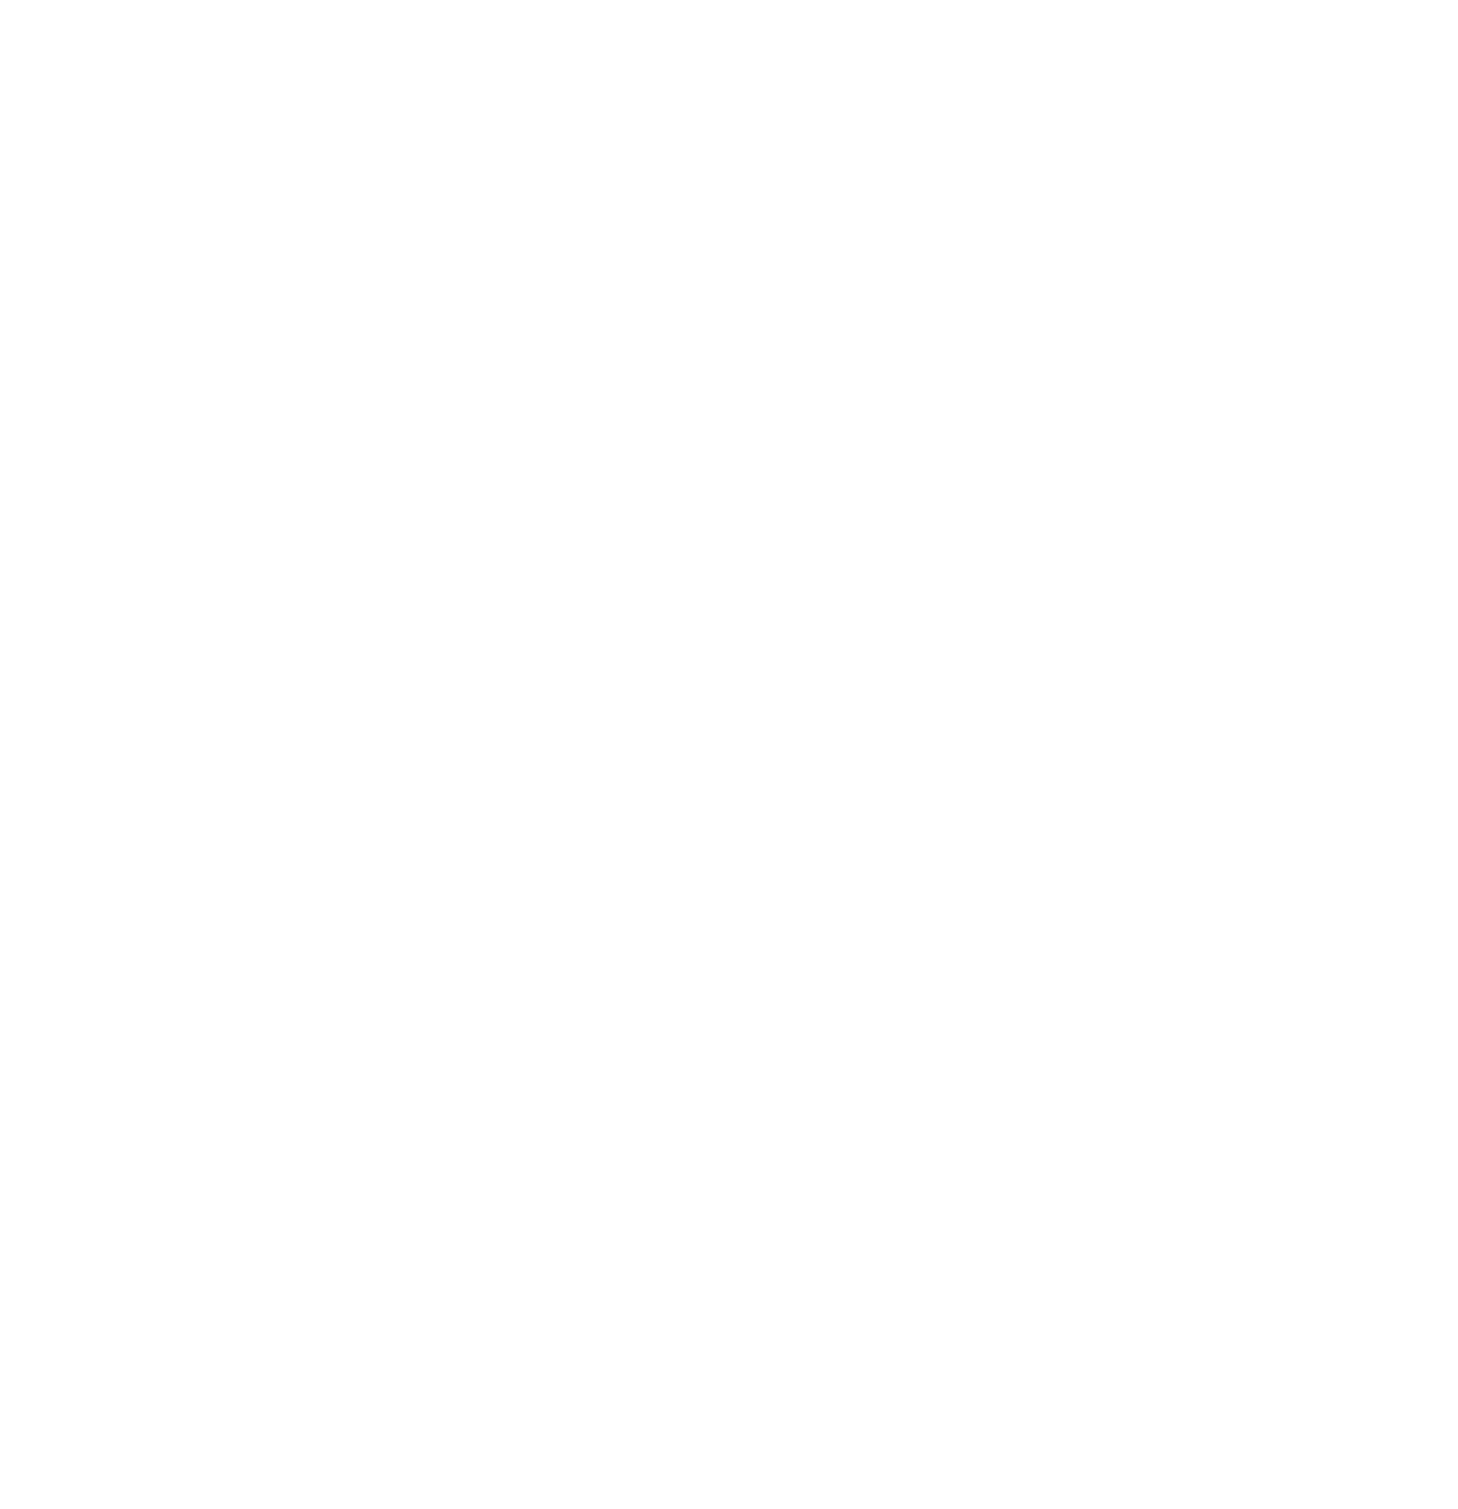 SES S.A. logo for dark backgrounds (transparent PNG)